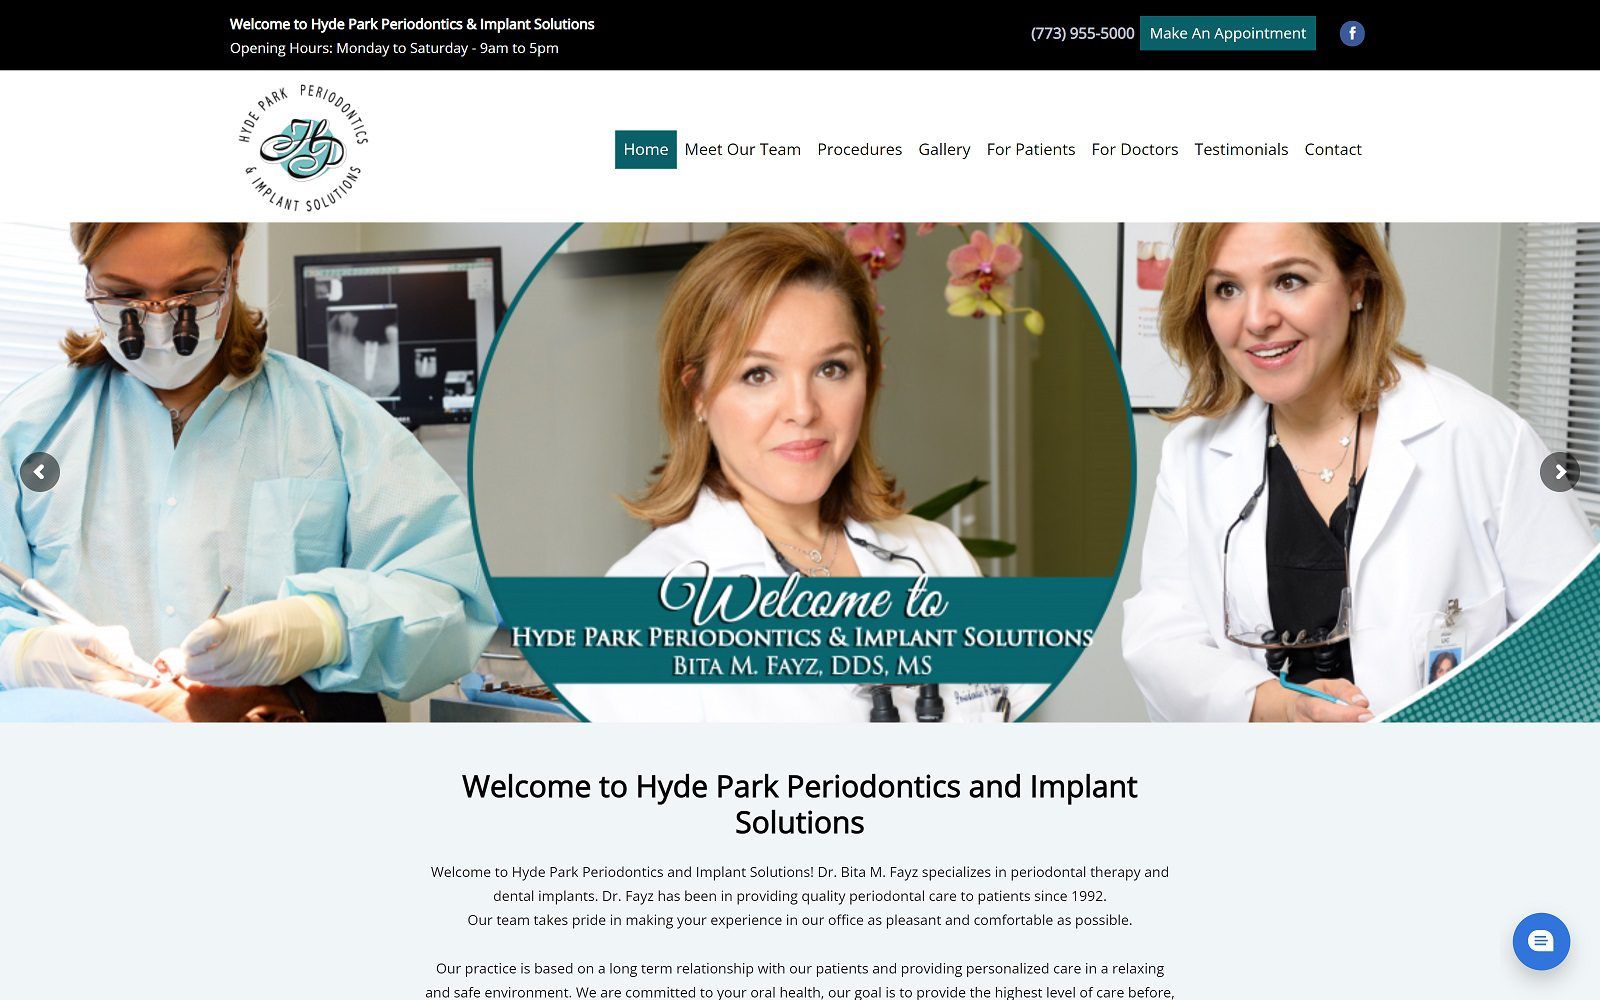 The screenshot of hyde park periodontics & implant solutions dr. Bita fayz website